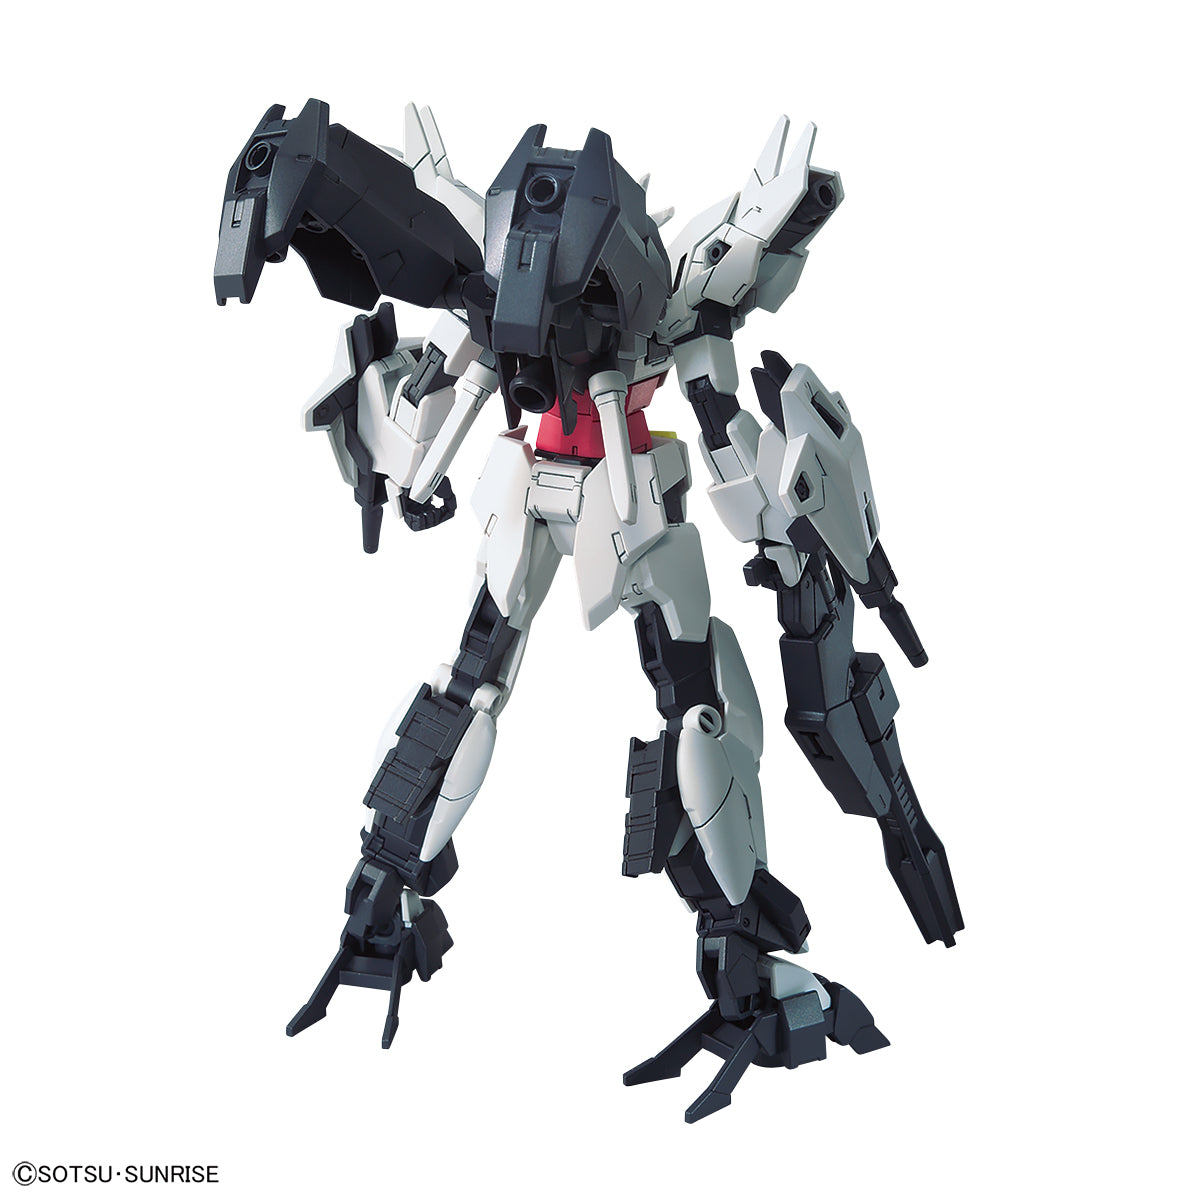 HGBD: R 1/144 Jupiter Gundam